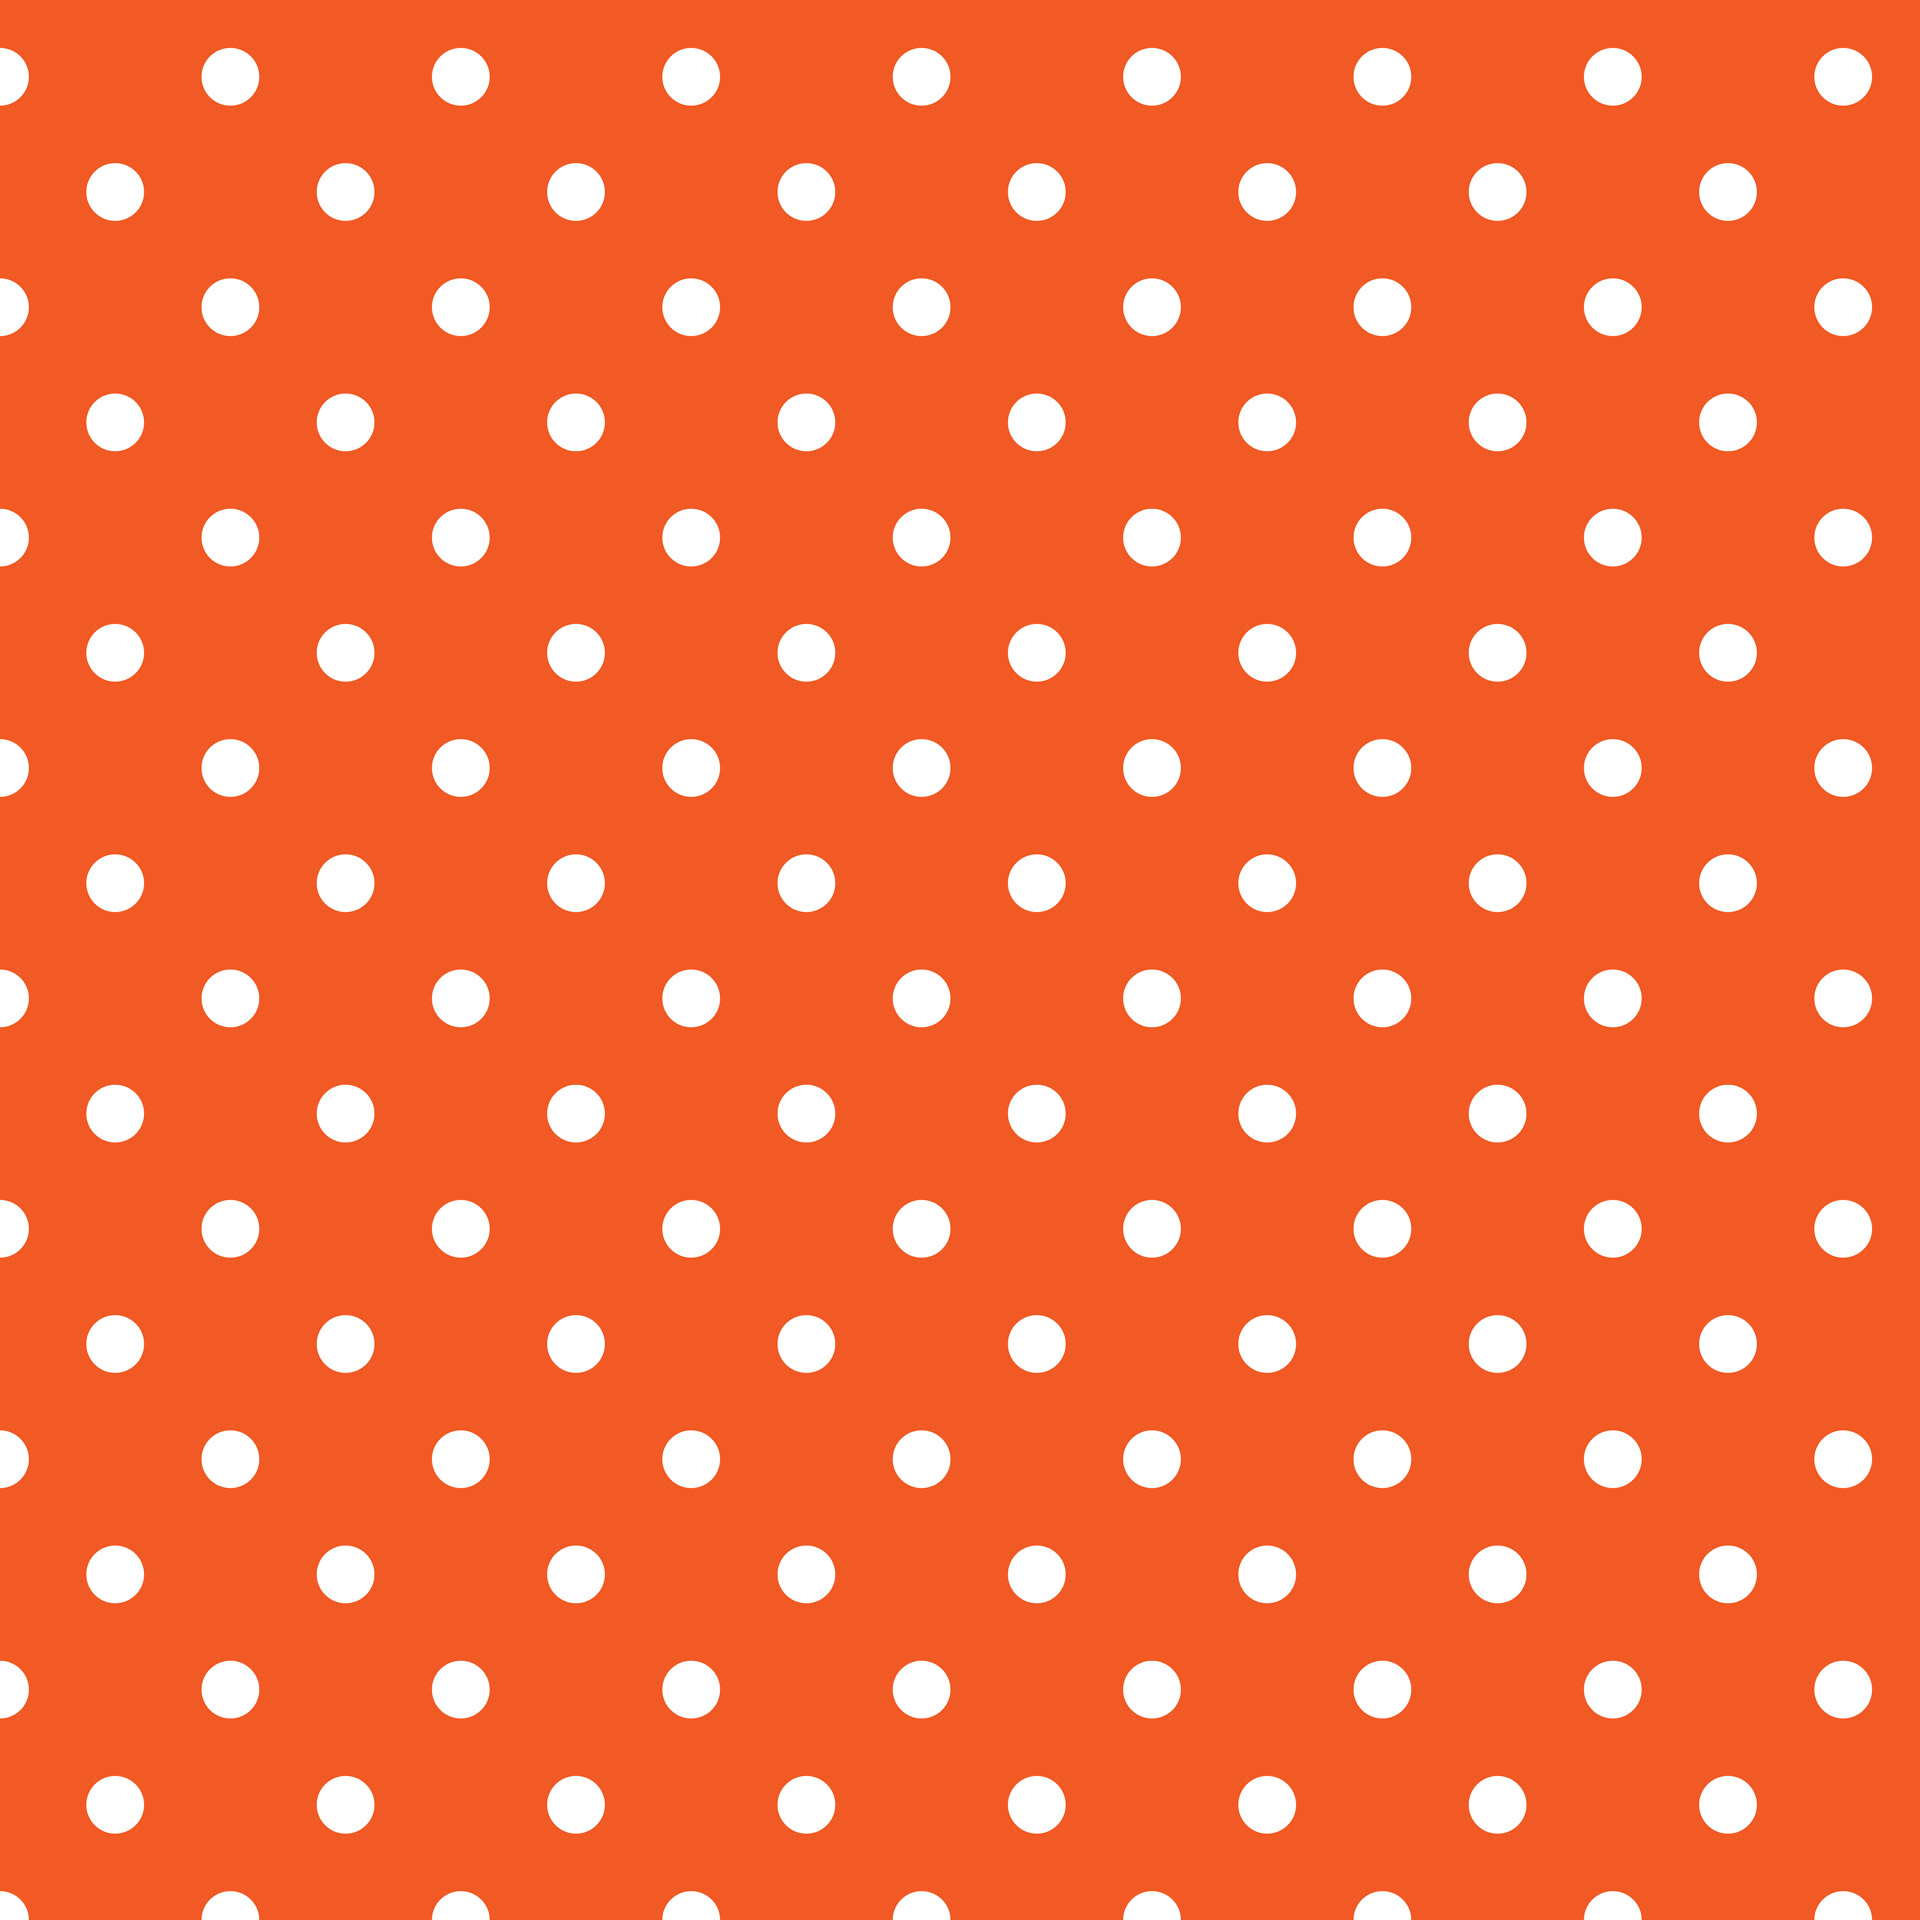 polka-dots-orange-background-1364303503xIK | Penn's Favorite (And ...